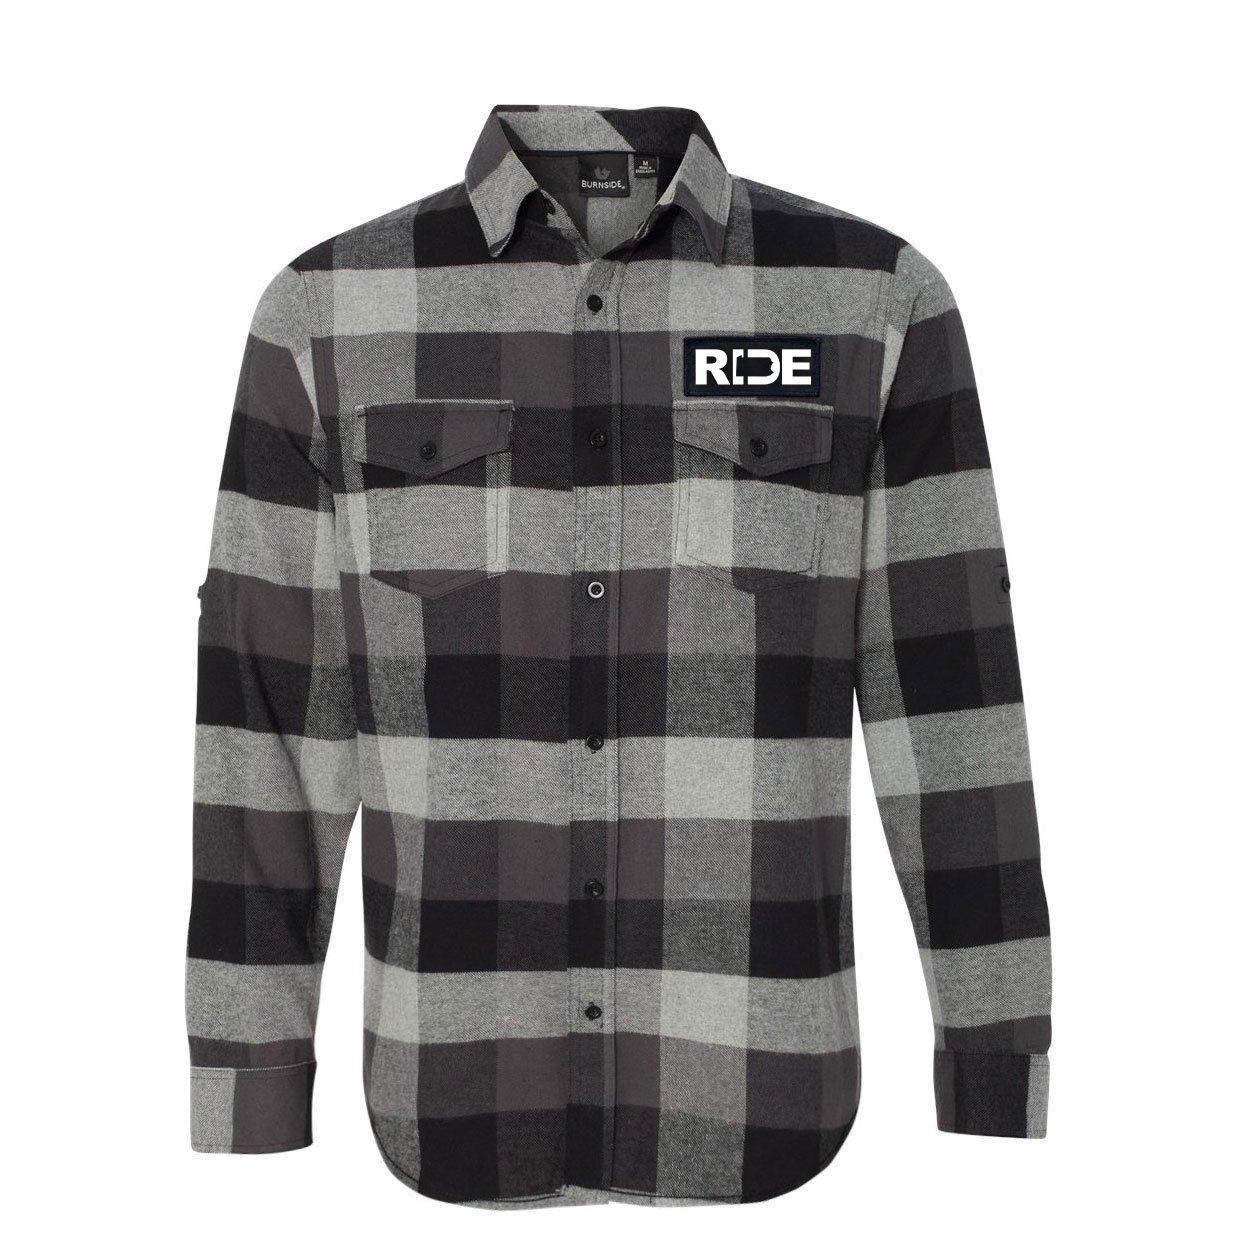 Ride Pennsylvania Classic Unisex Long Sleeve Woven Patch Flannel Shirt Black/Gray (White Logo)